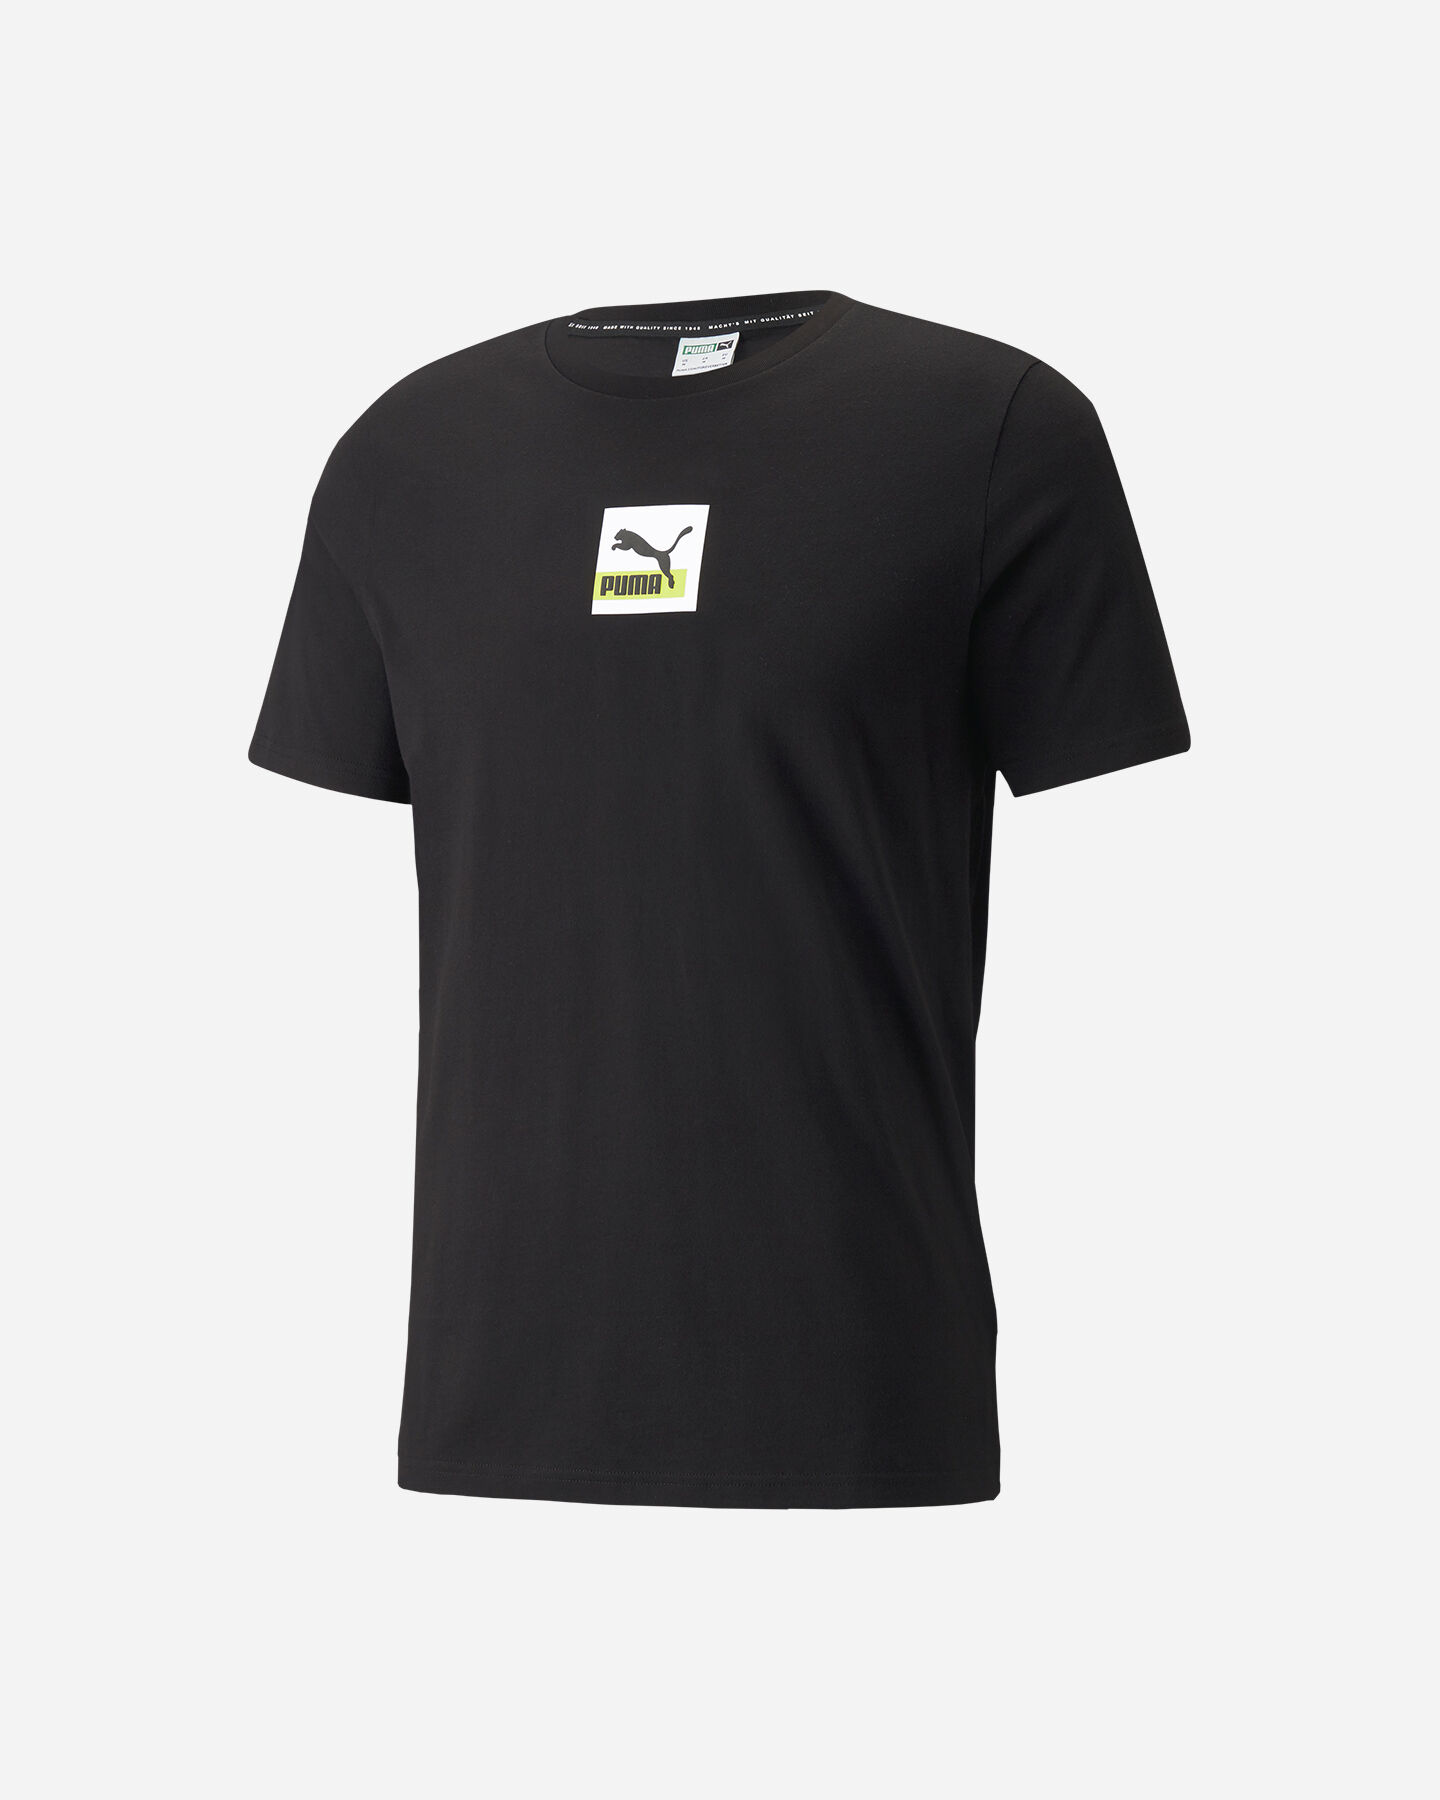  T-Shirt PUMA BRAND LOVE M S5399559|01|S scatto 0